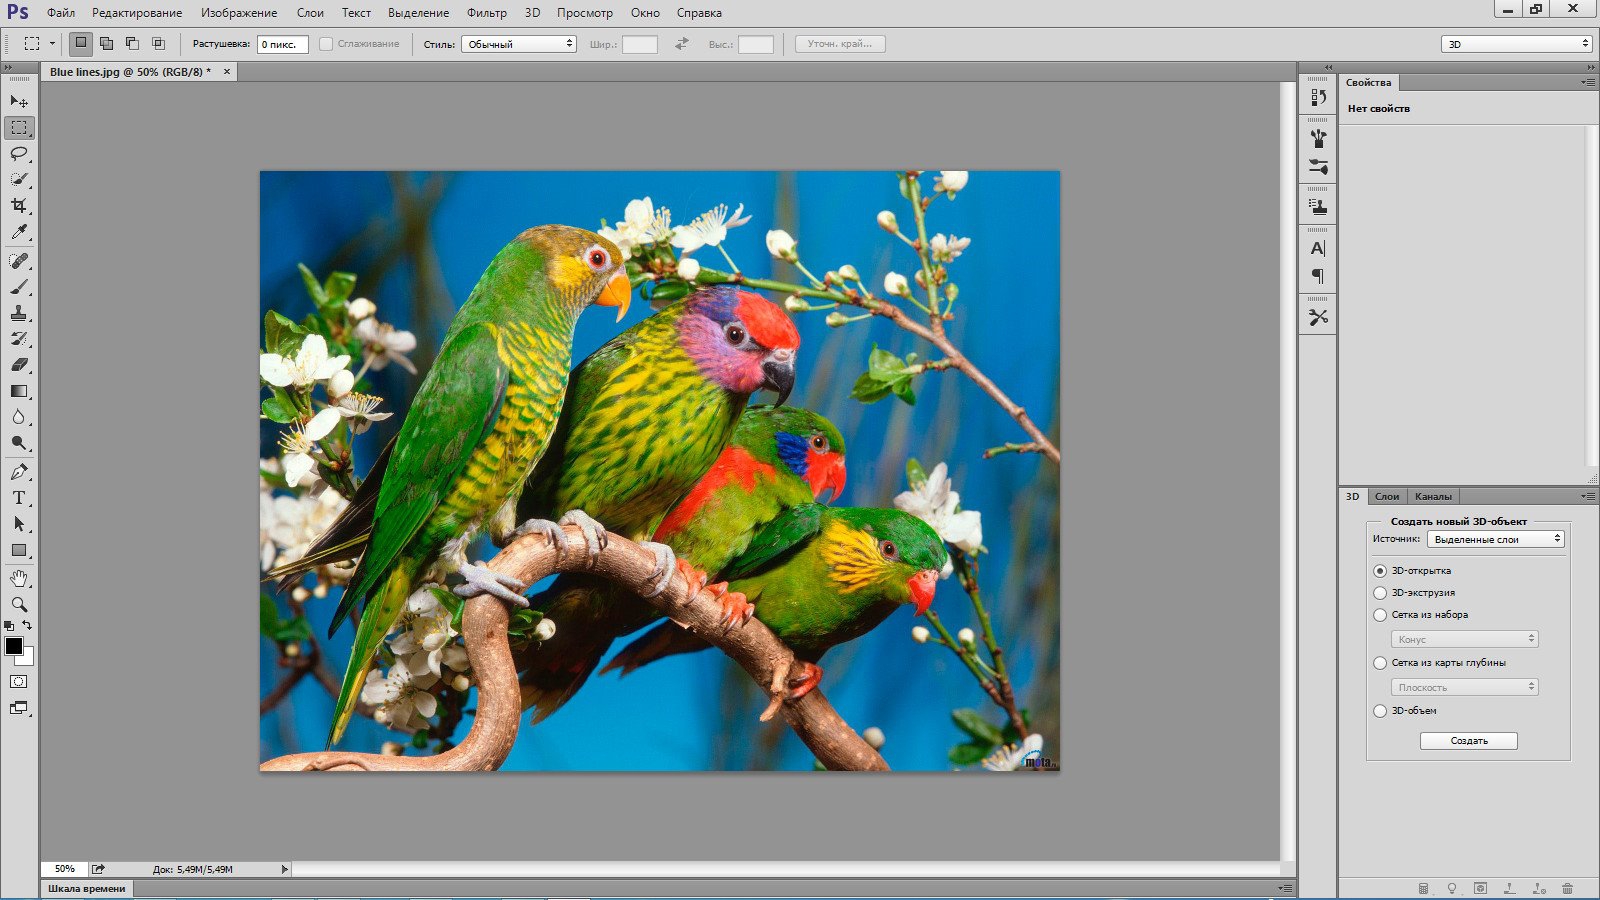 Adobe Photoshop CC 2014 15.0.0.58